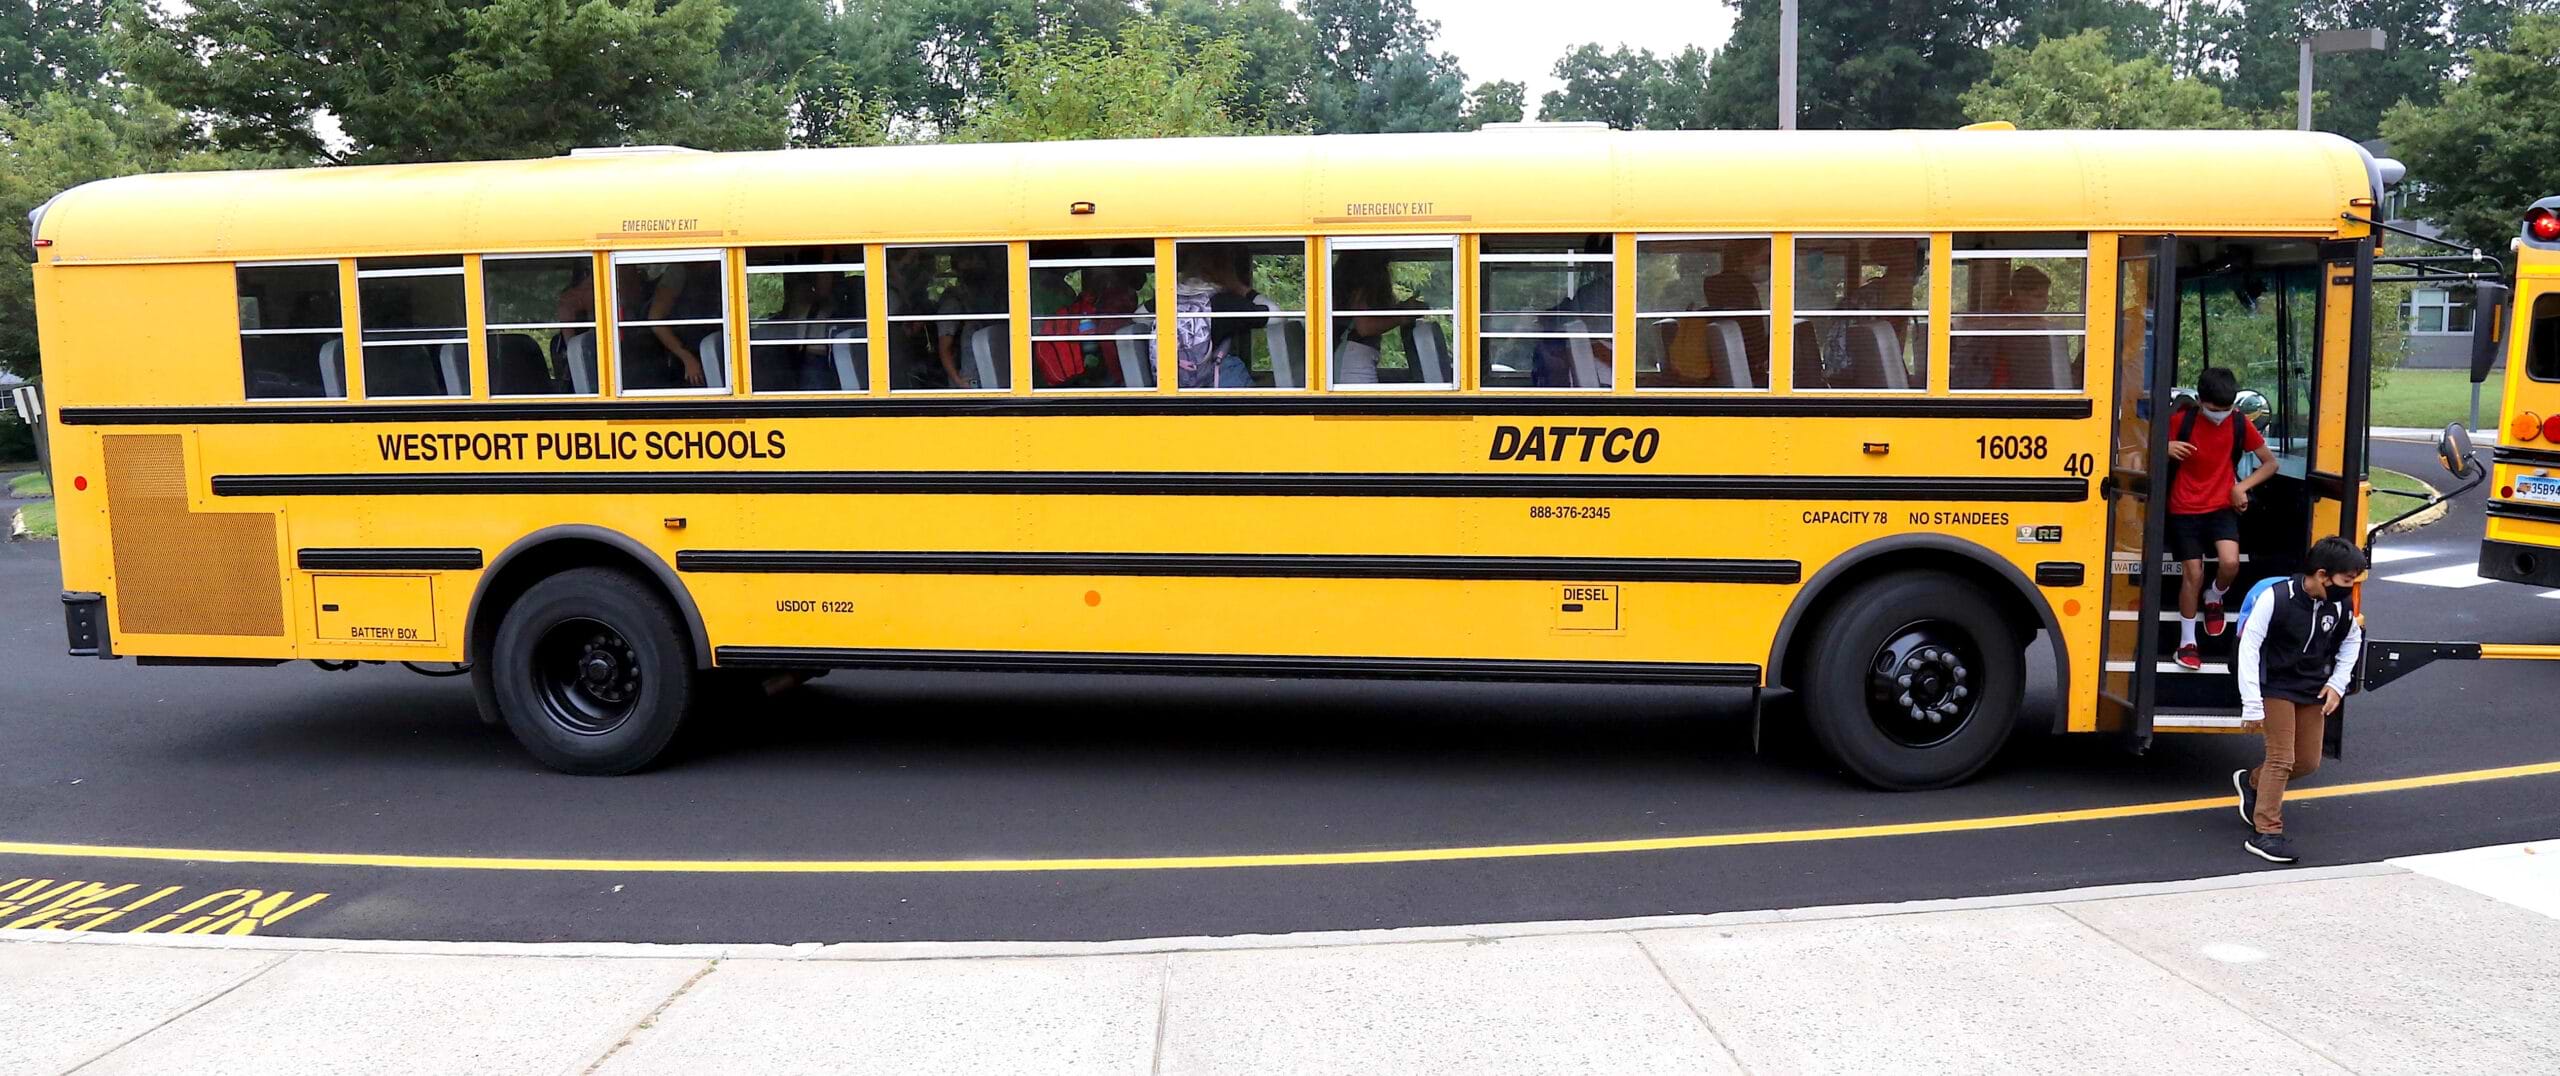 five-schools-tapped-to-temporarily-host-school-bus-parking-westport